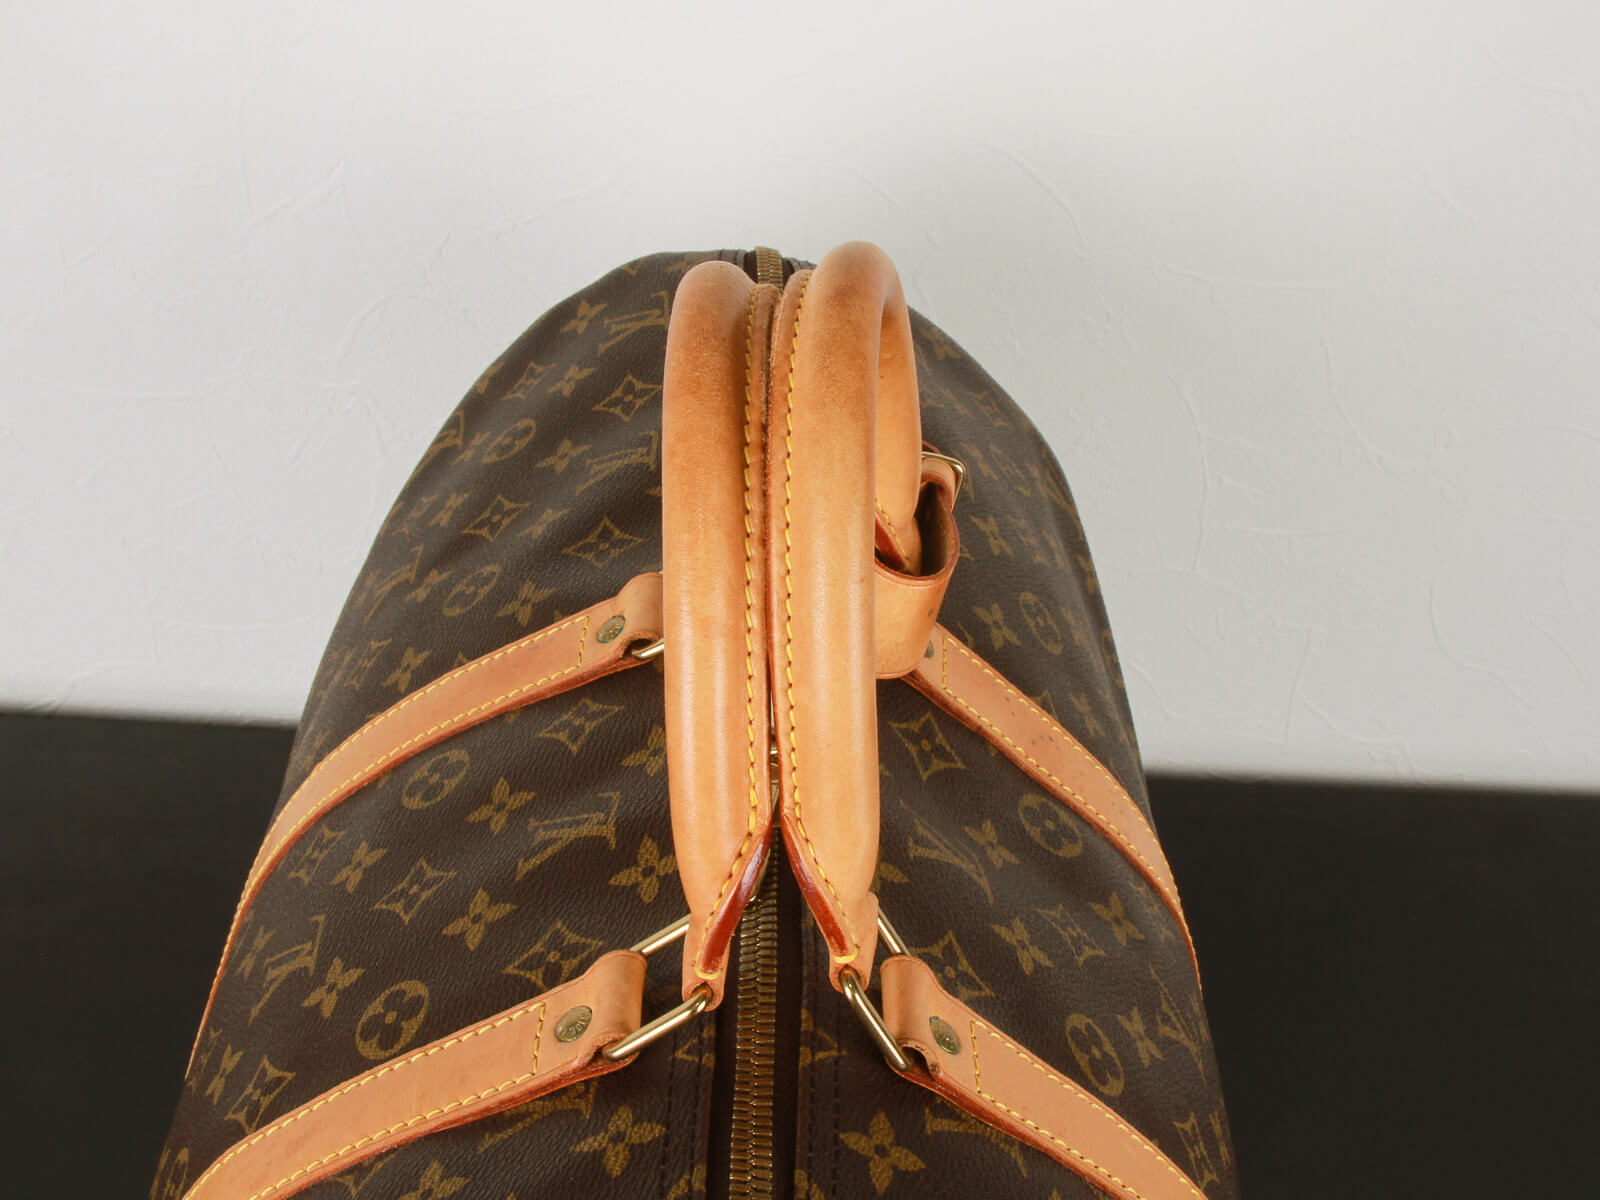 Louis Vuitton Keepall Handbag 395134, UhfmrShops